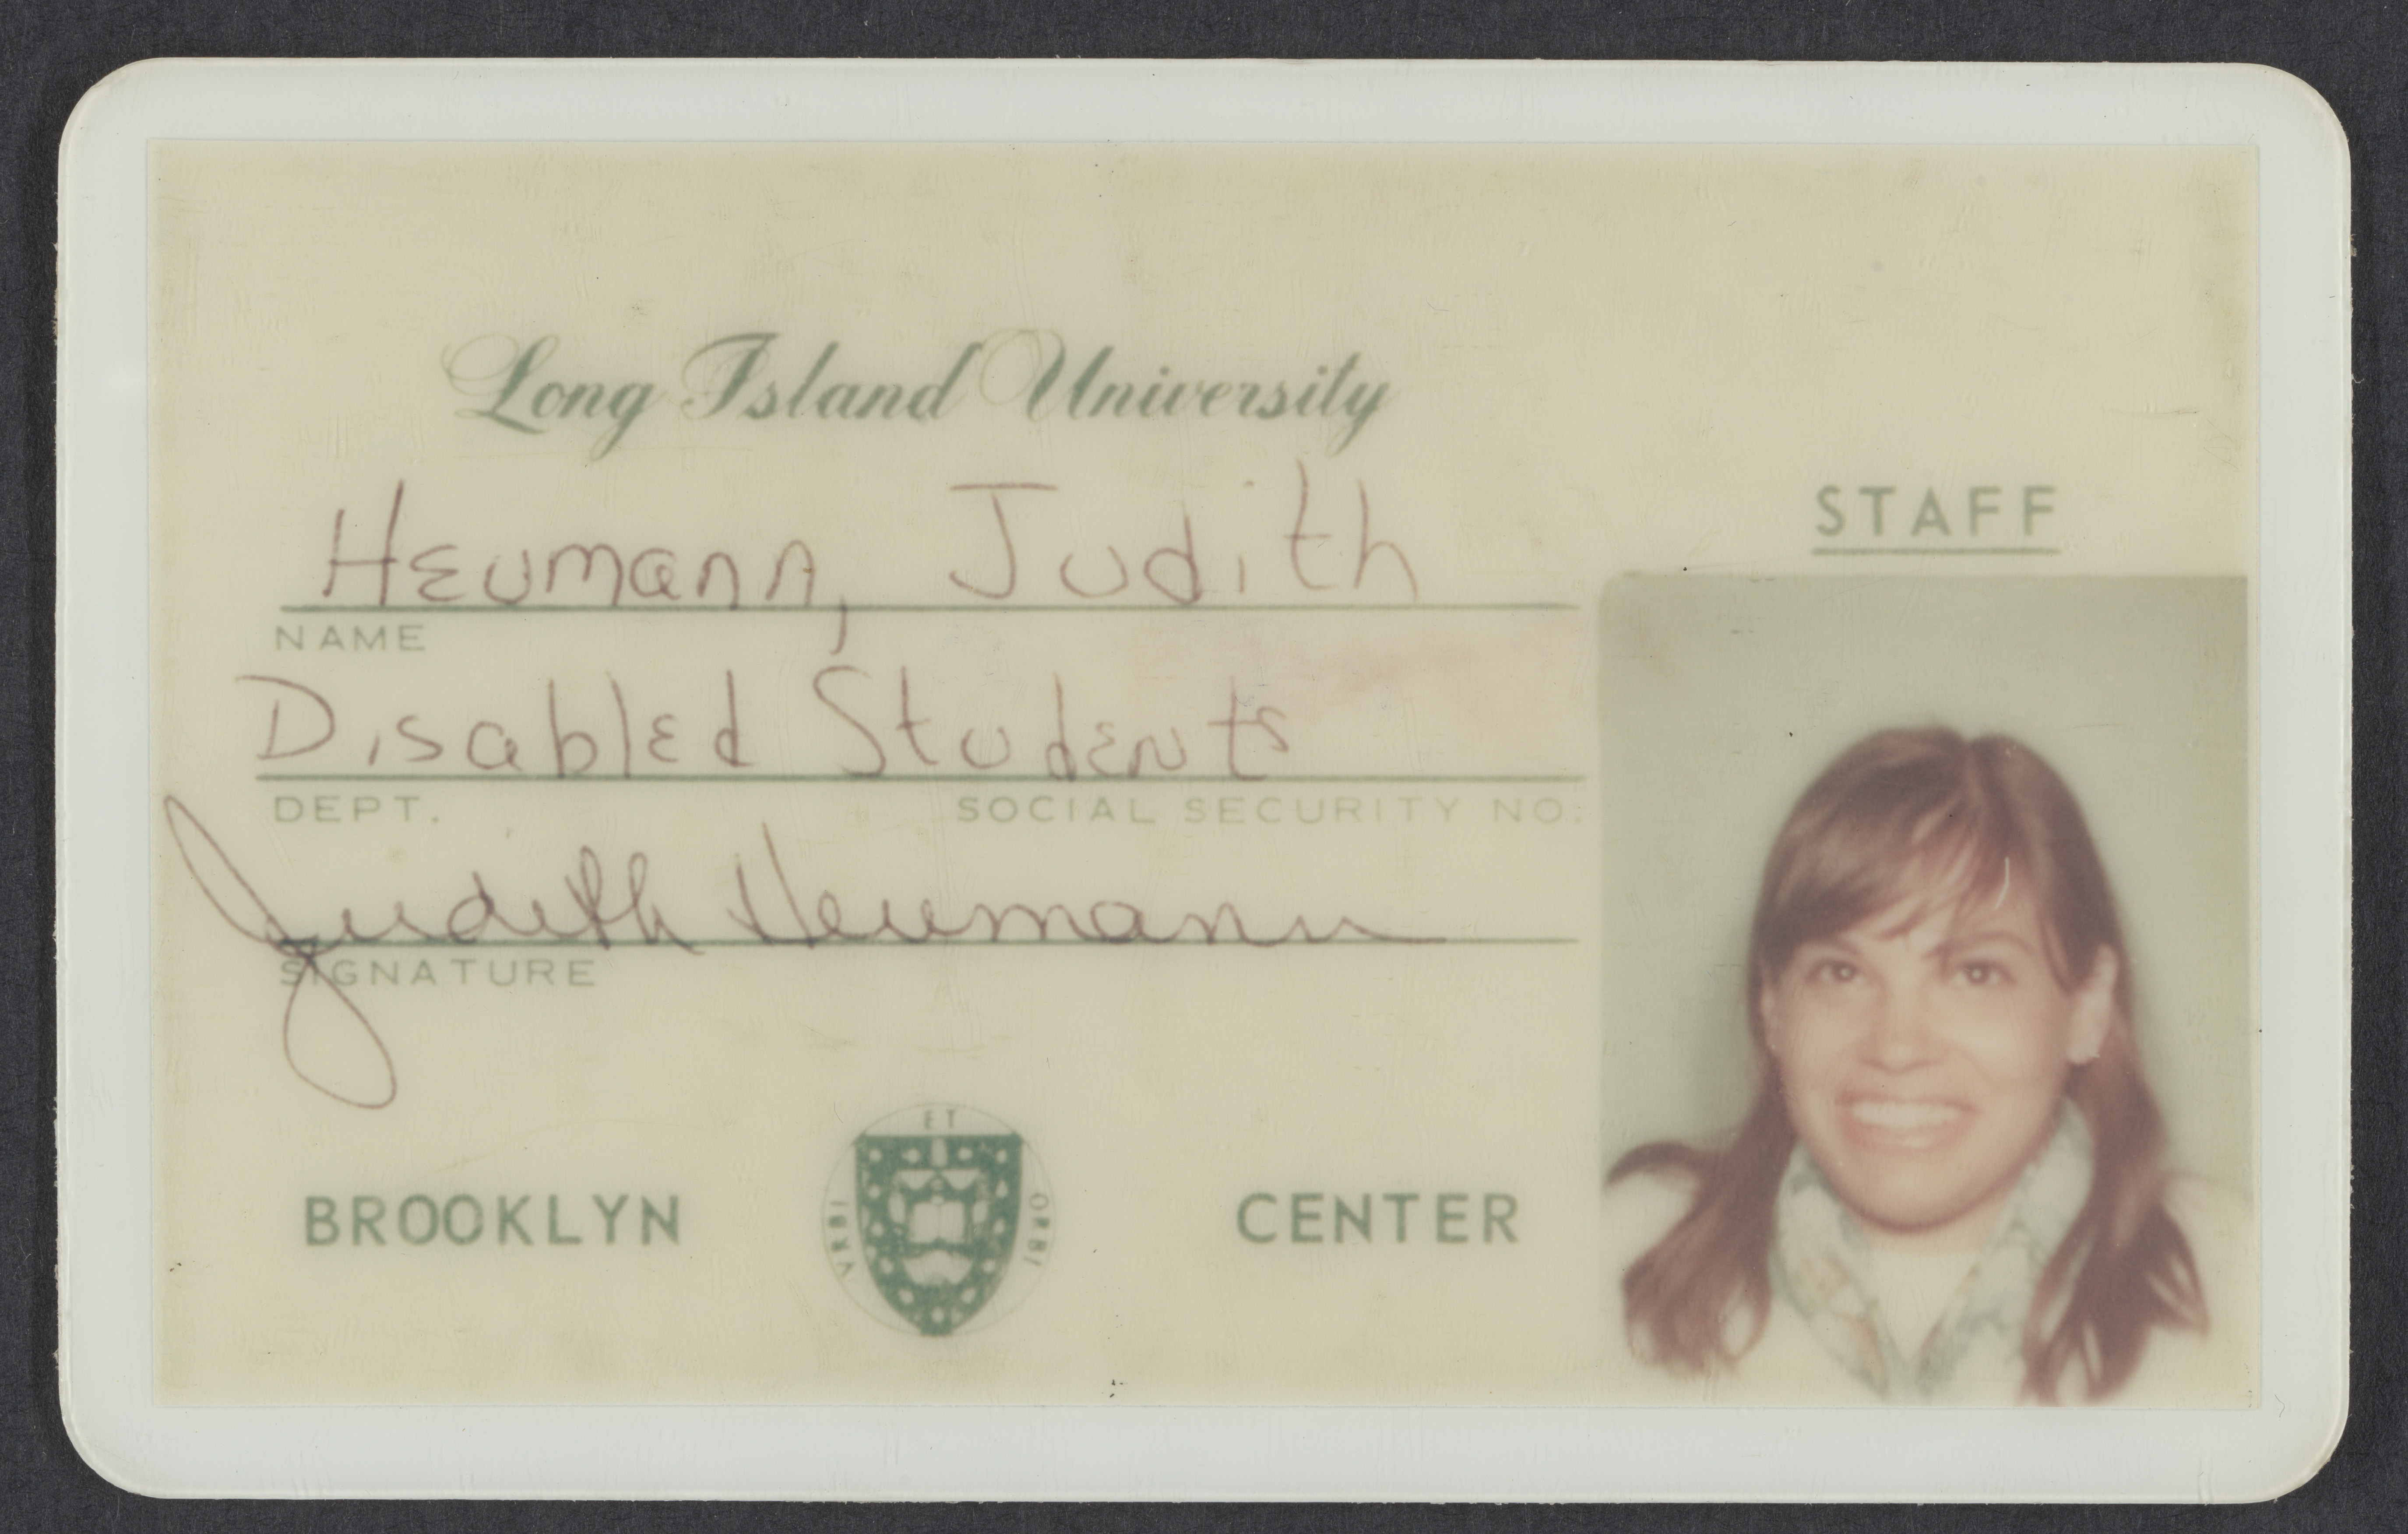 Identification card for Judy Heumann Long Island University.